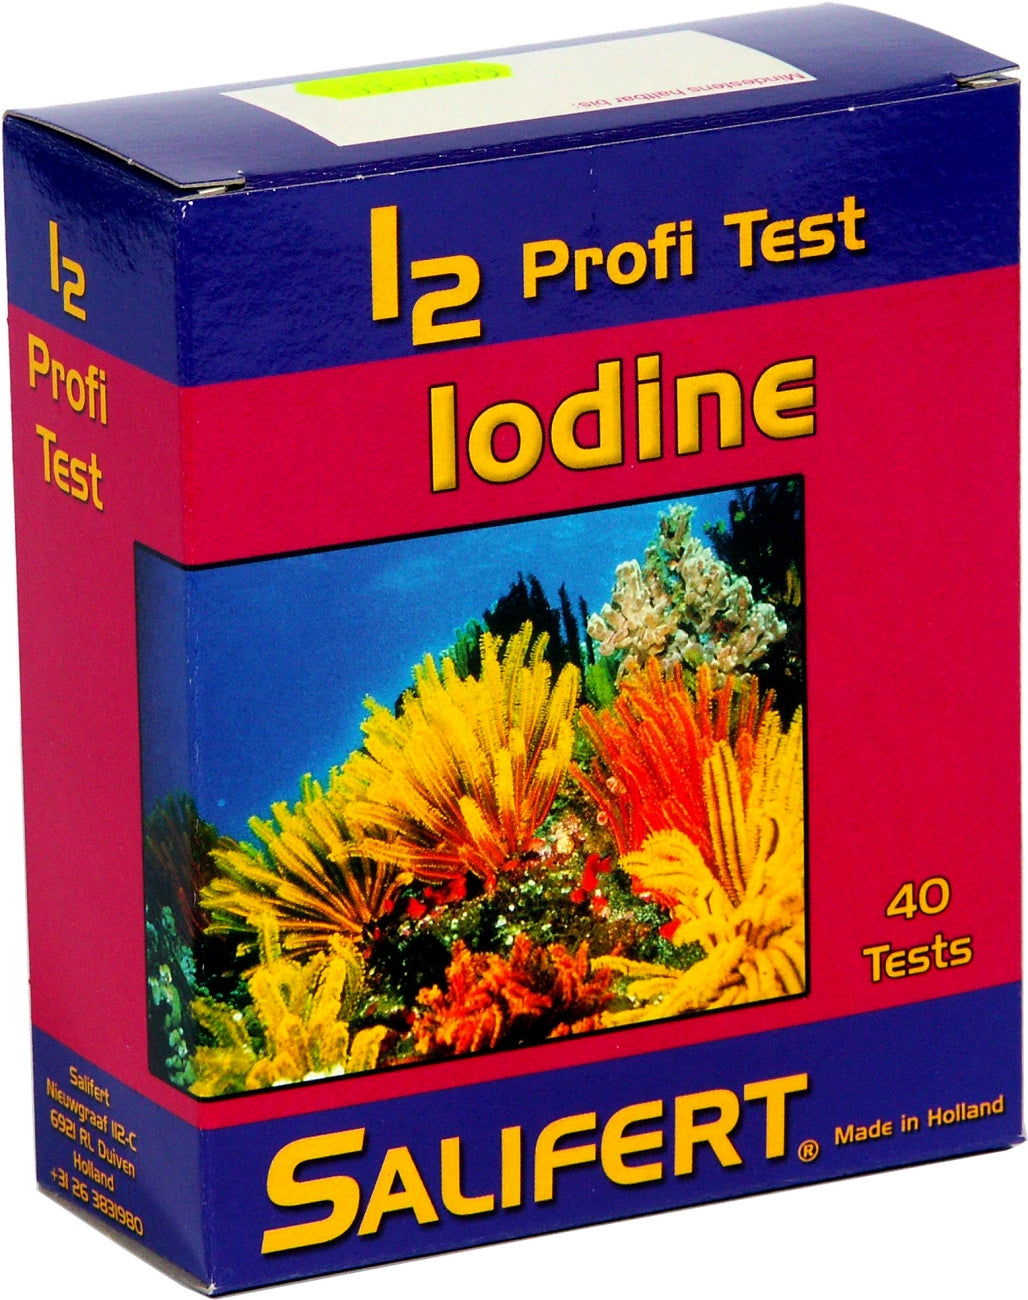 Salifert Iodine I2 Profi test available at Coral Passion in Essex